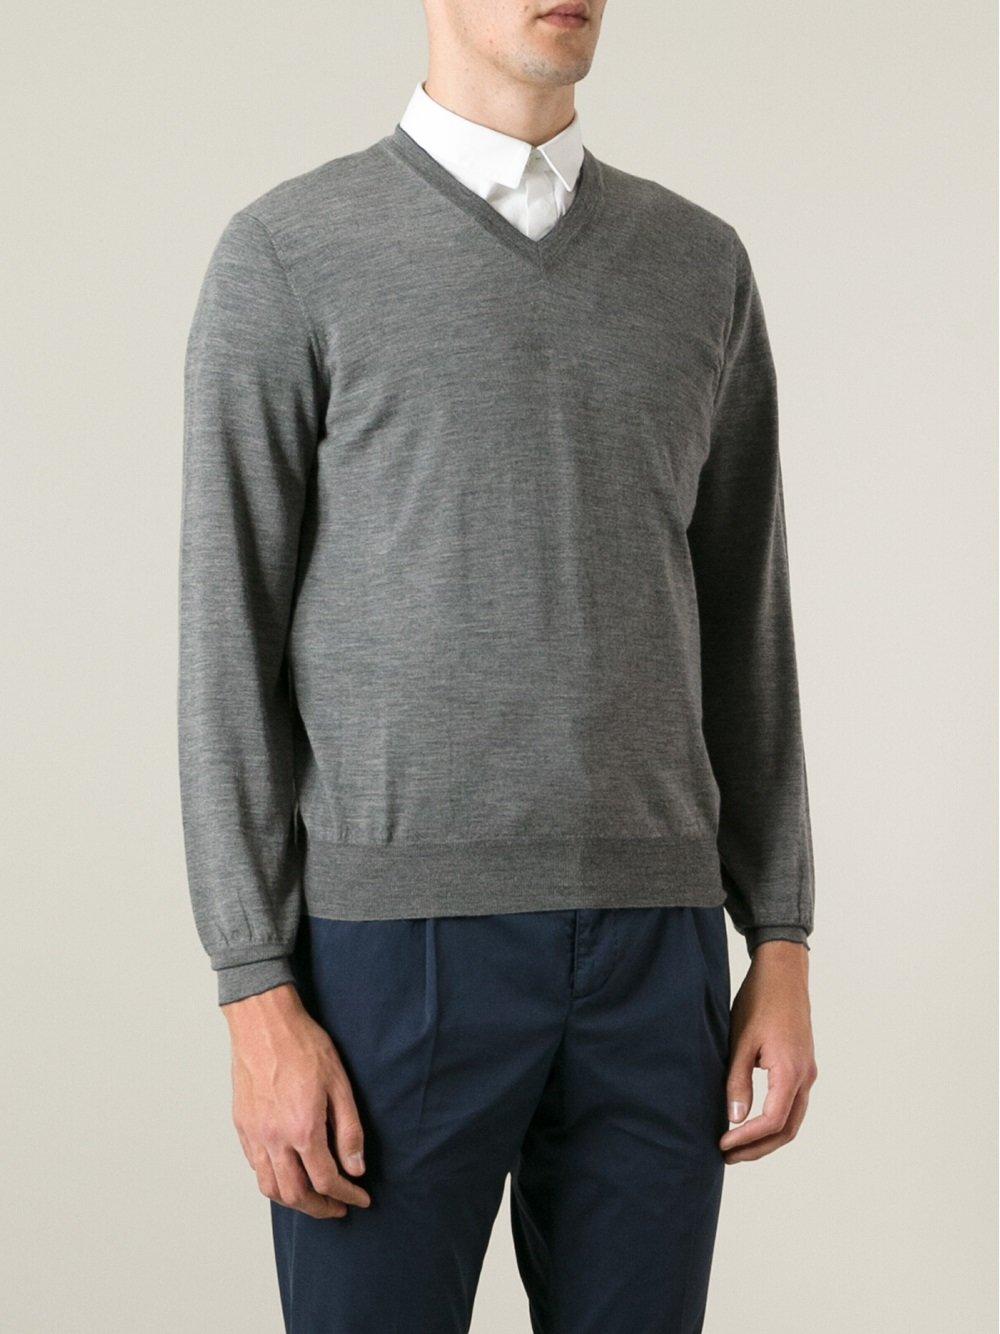 Lyst - Brunello Cucinelli V-neck Sweater in Gray for Men